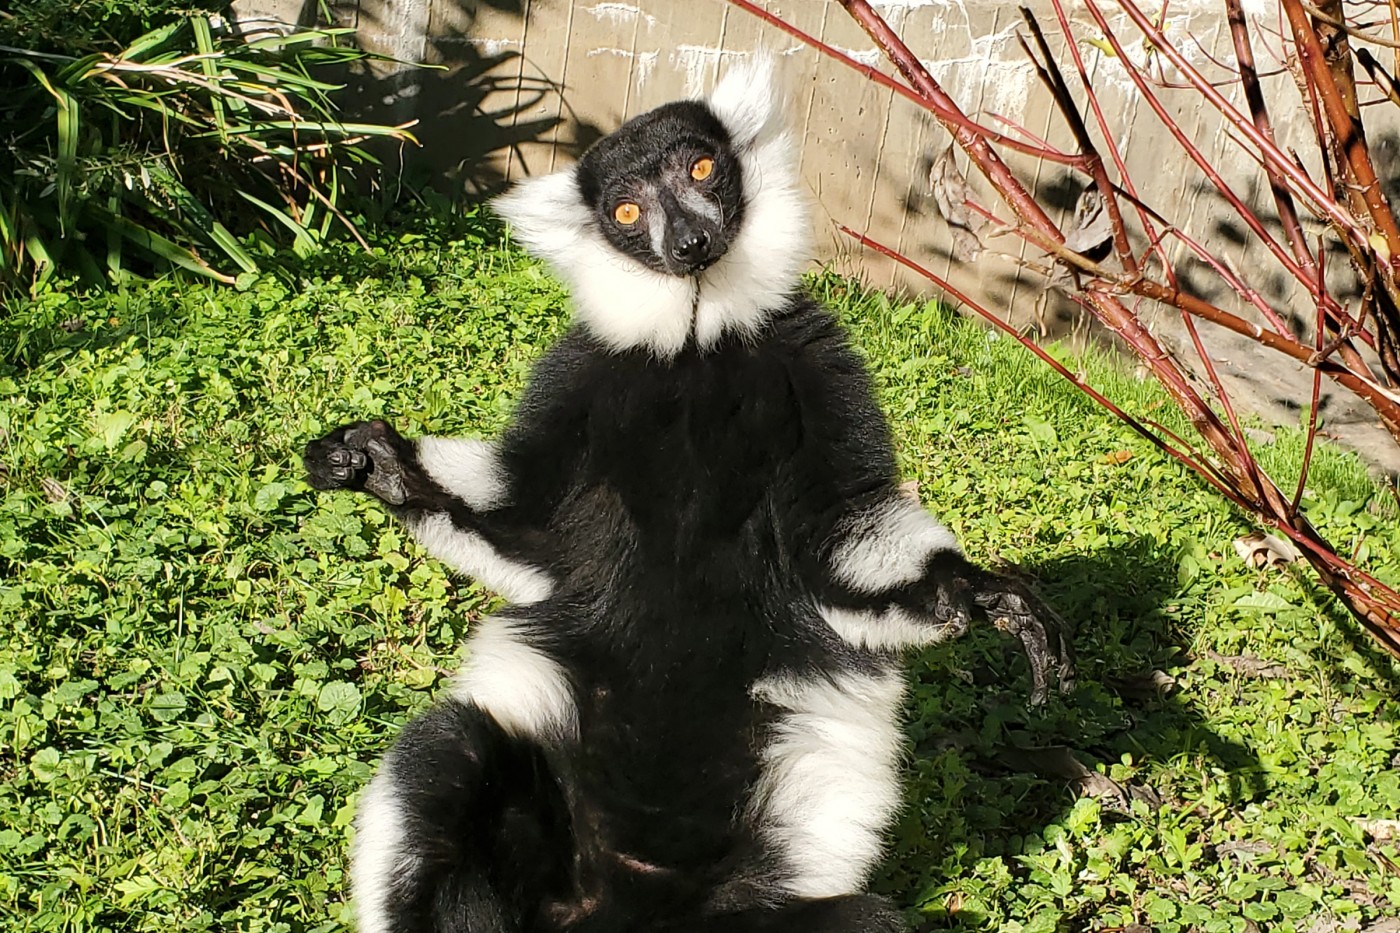 Black-and-white ruffed lemur Wiley suns himself at Lemur Island.